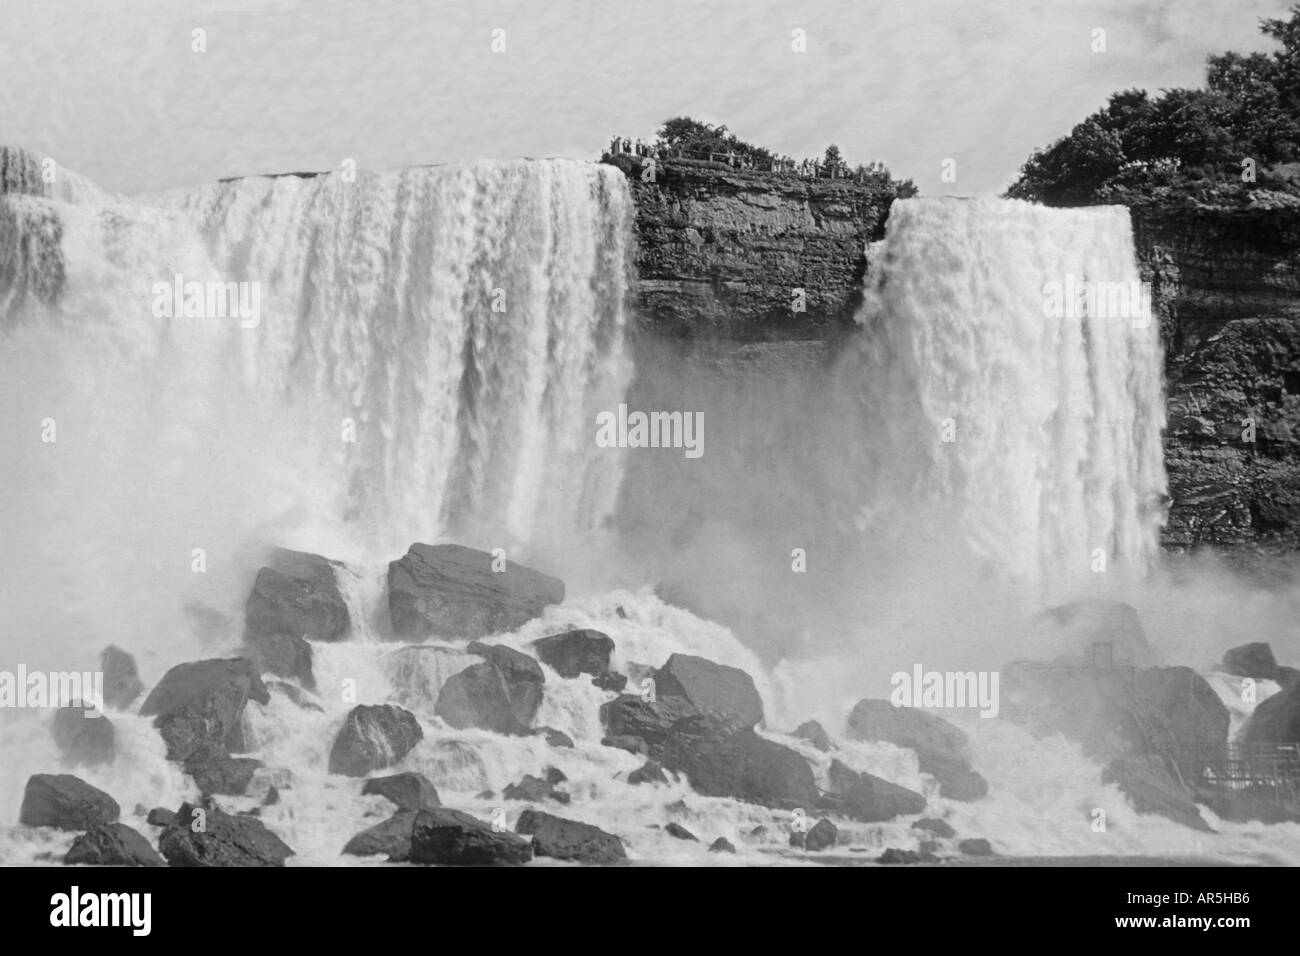 Black and White Image of Niagara Falls American Falls Bridal Veil taken in 1953 Stock Photo